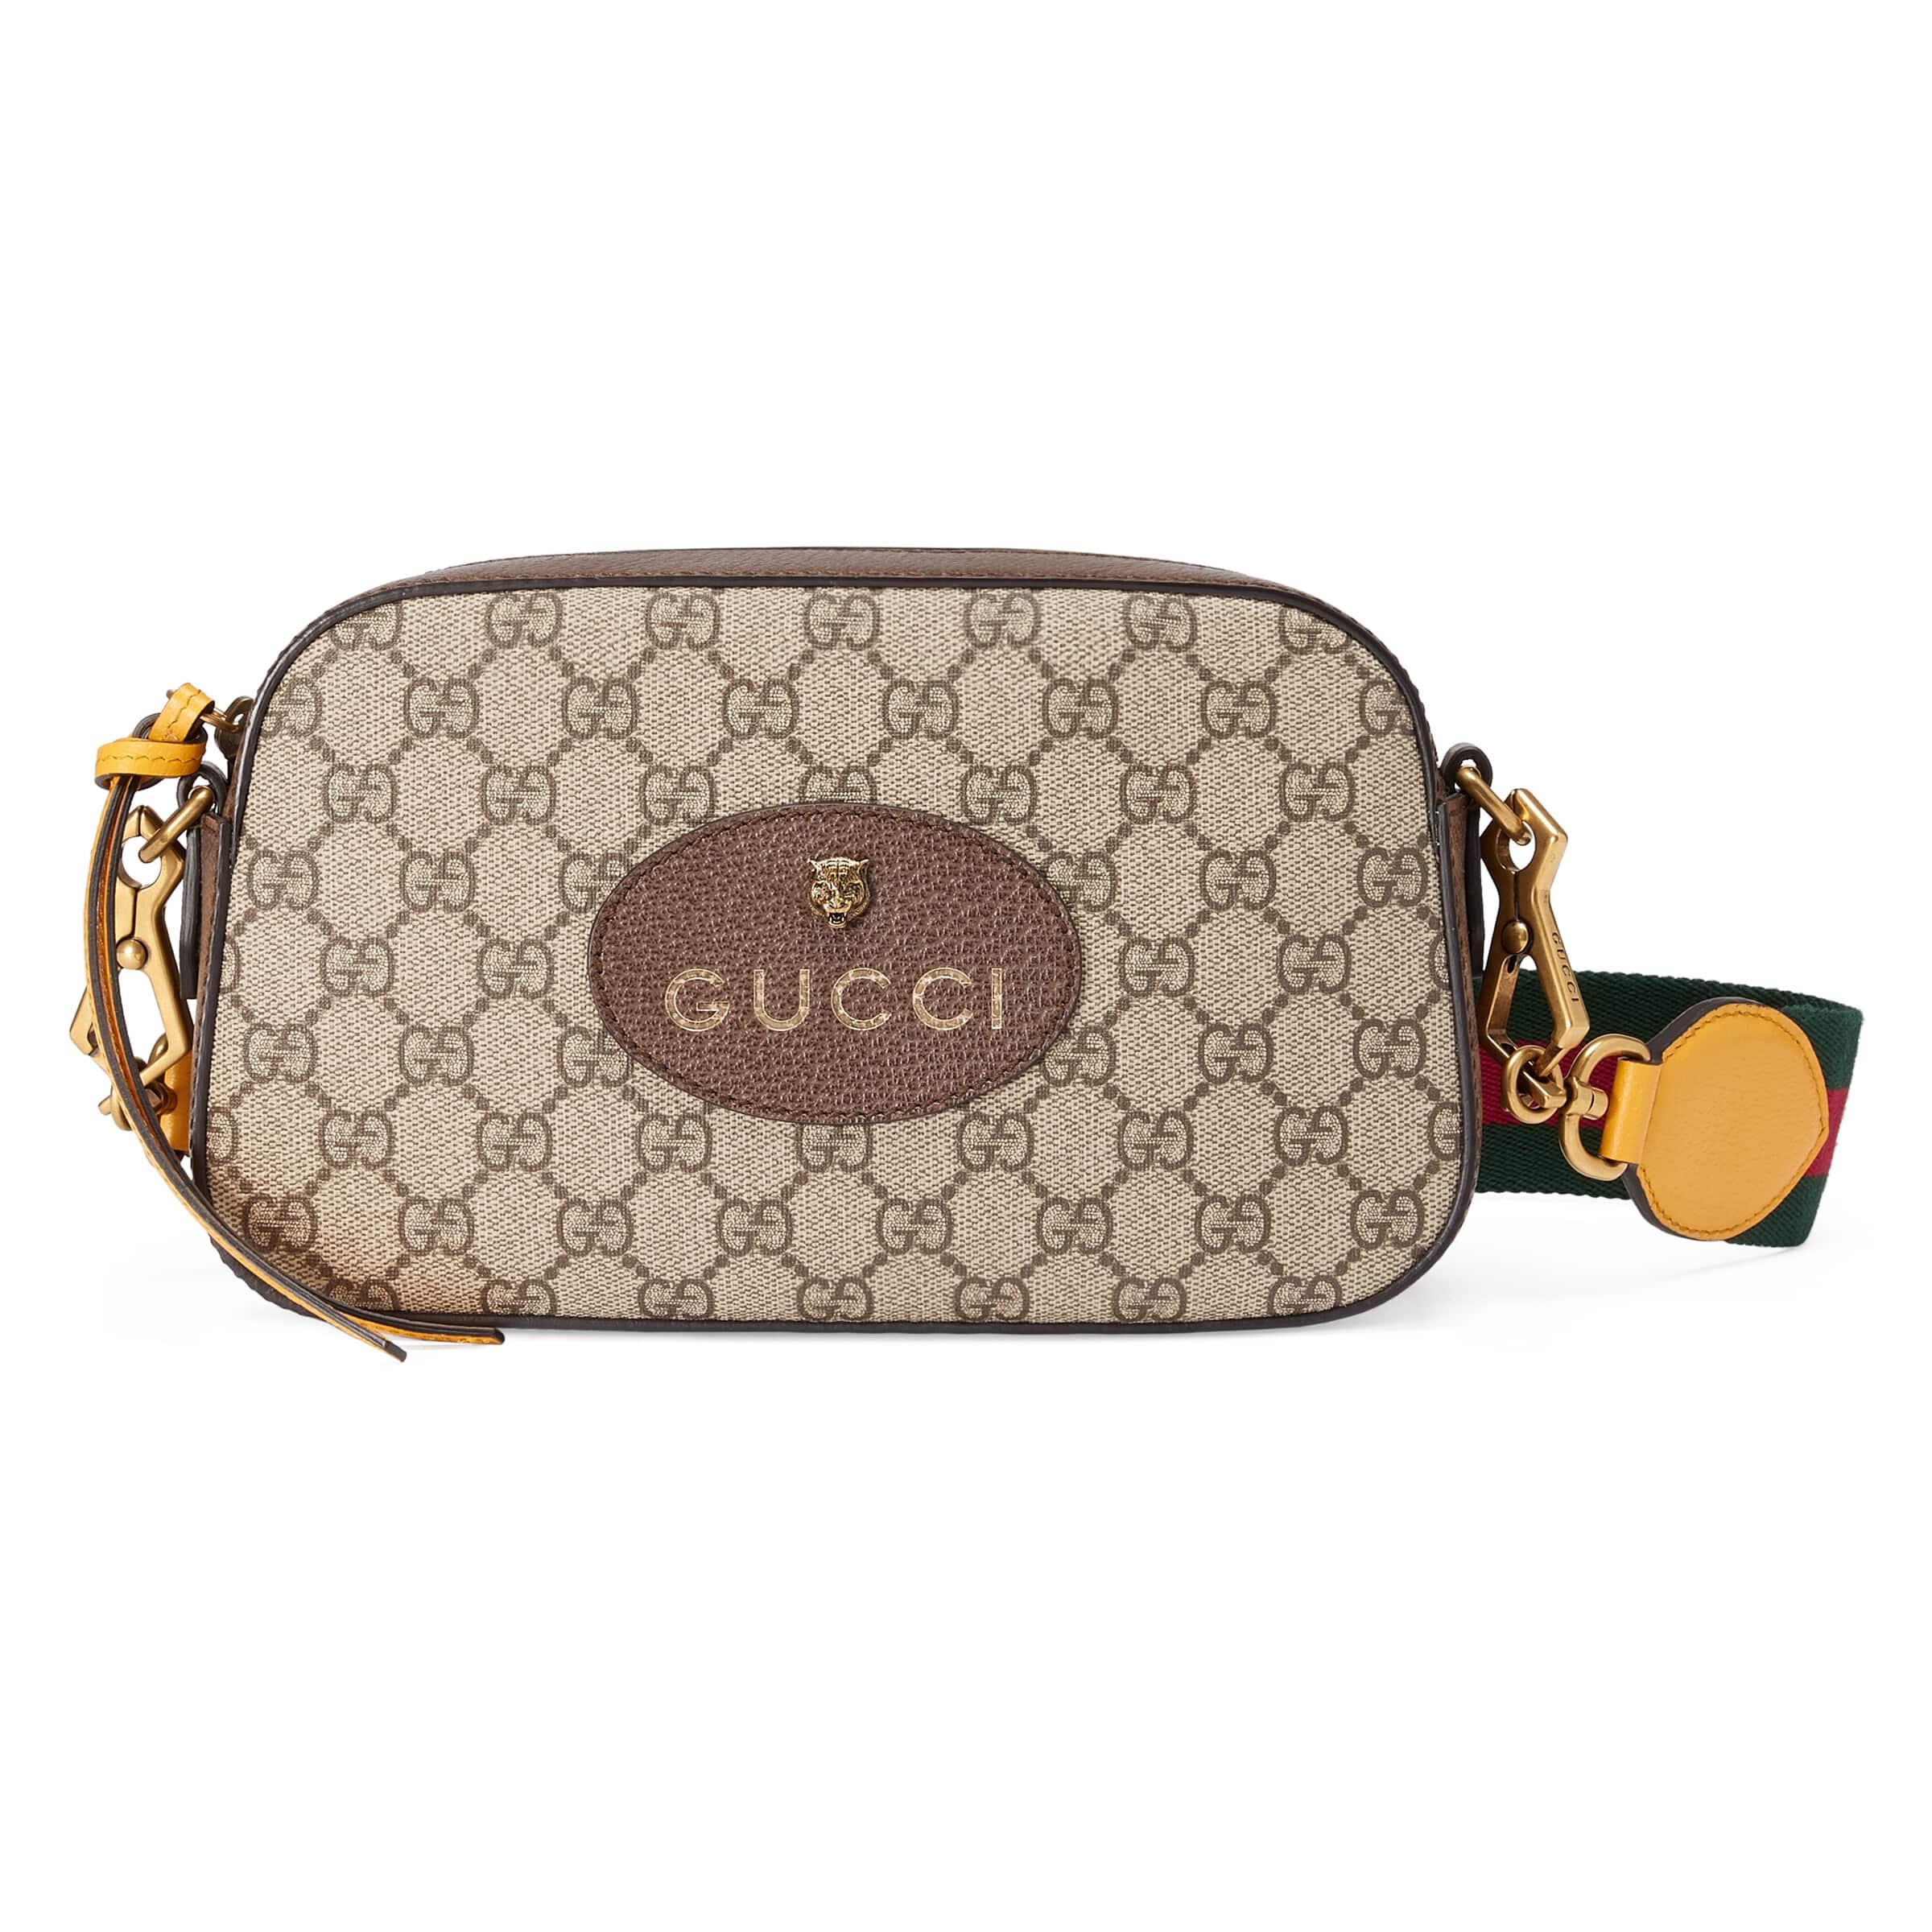 Gucci Canvas Neo Vintage GG Supreme Messenger Bag in Beige (Natural) - Save  11% | Lyst